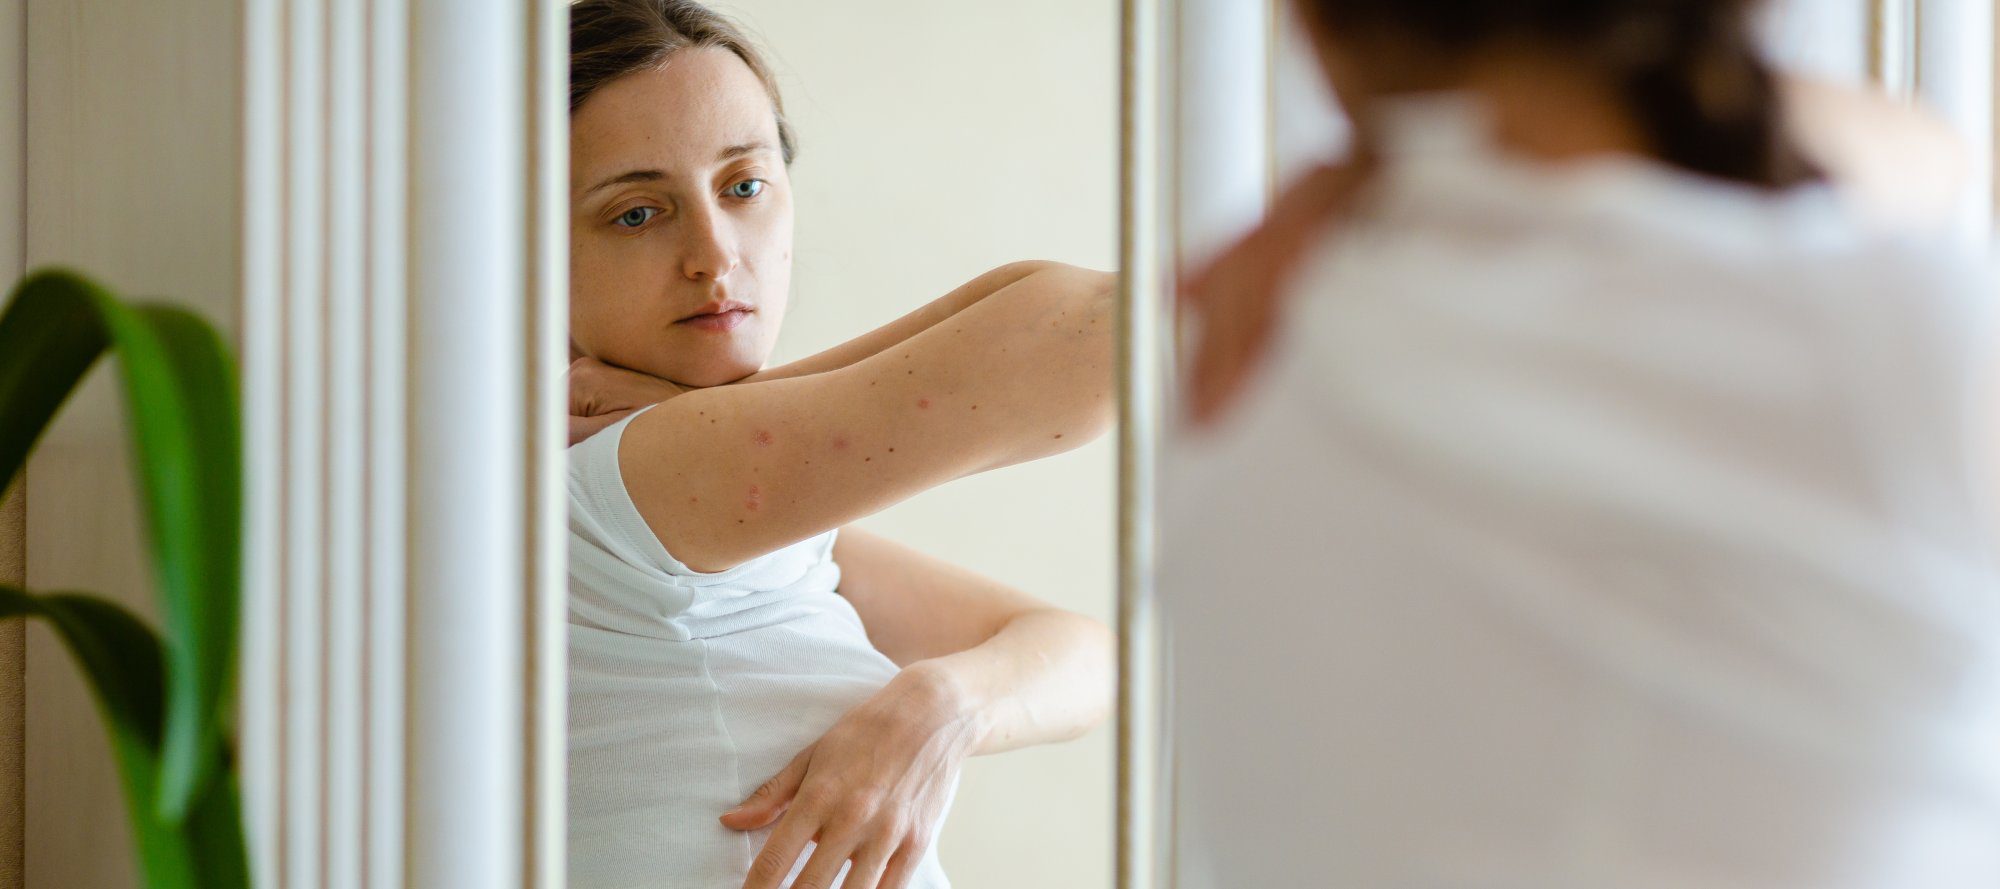 Woman looks to an itching rash